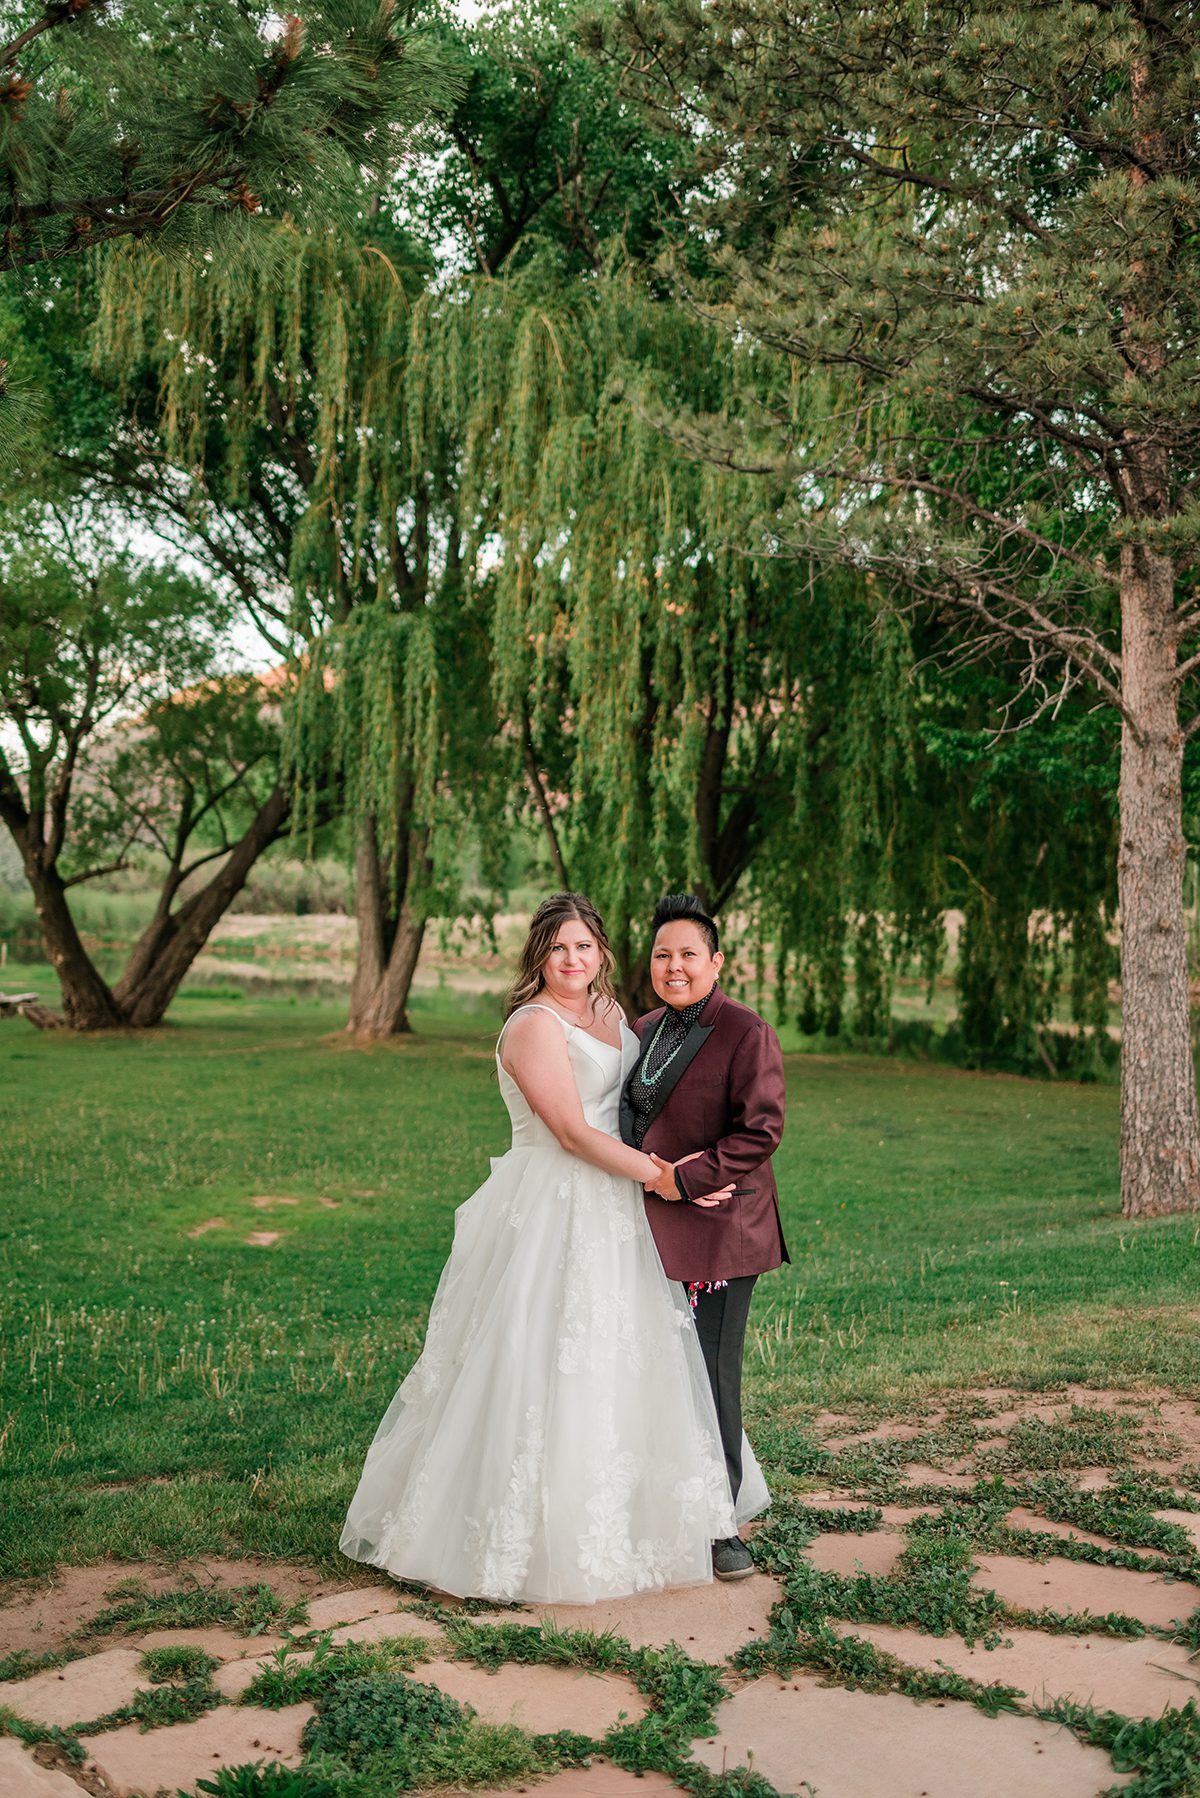 Hailey & Mich | River Bend Ranch Wedding in Durango